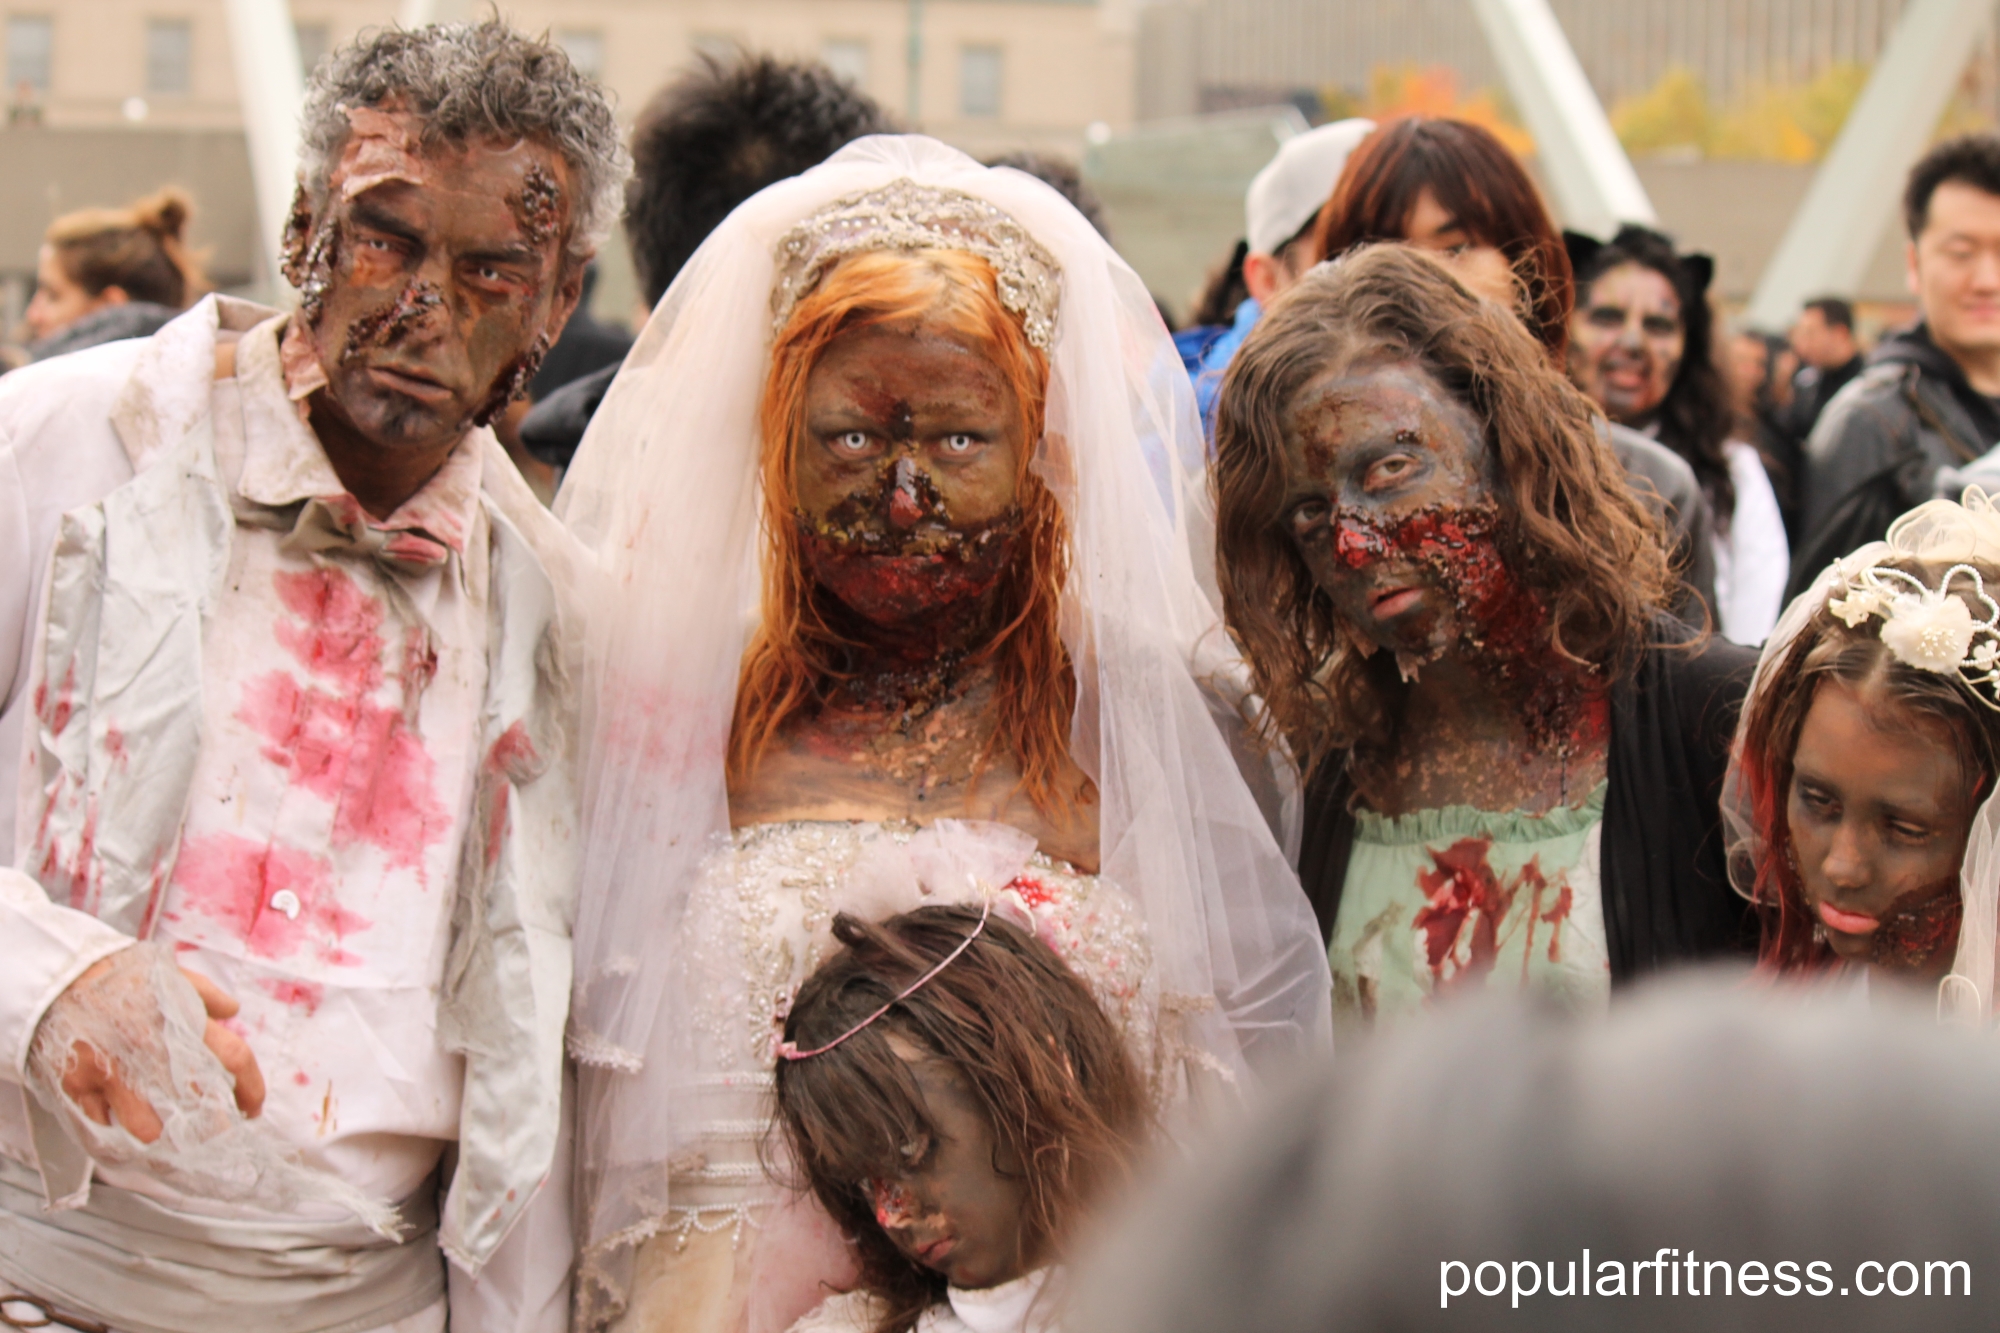 Zombies wedding - zombie groom, bride and zombie kids